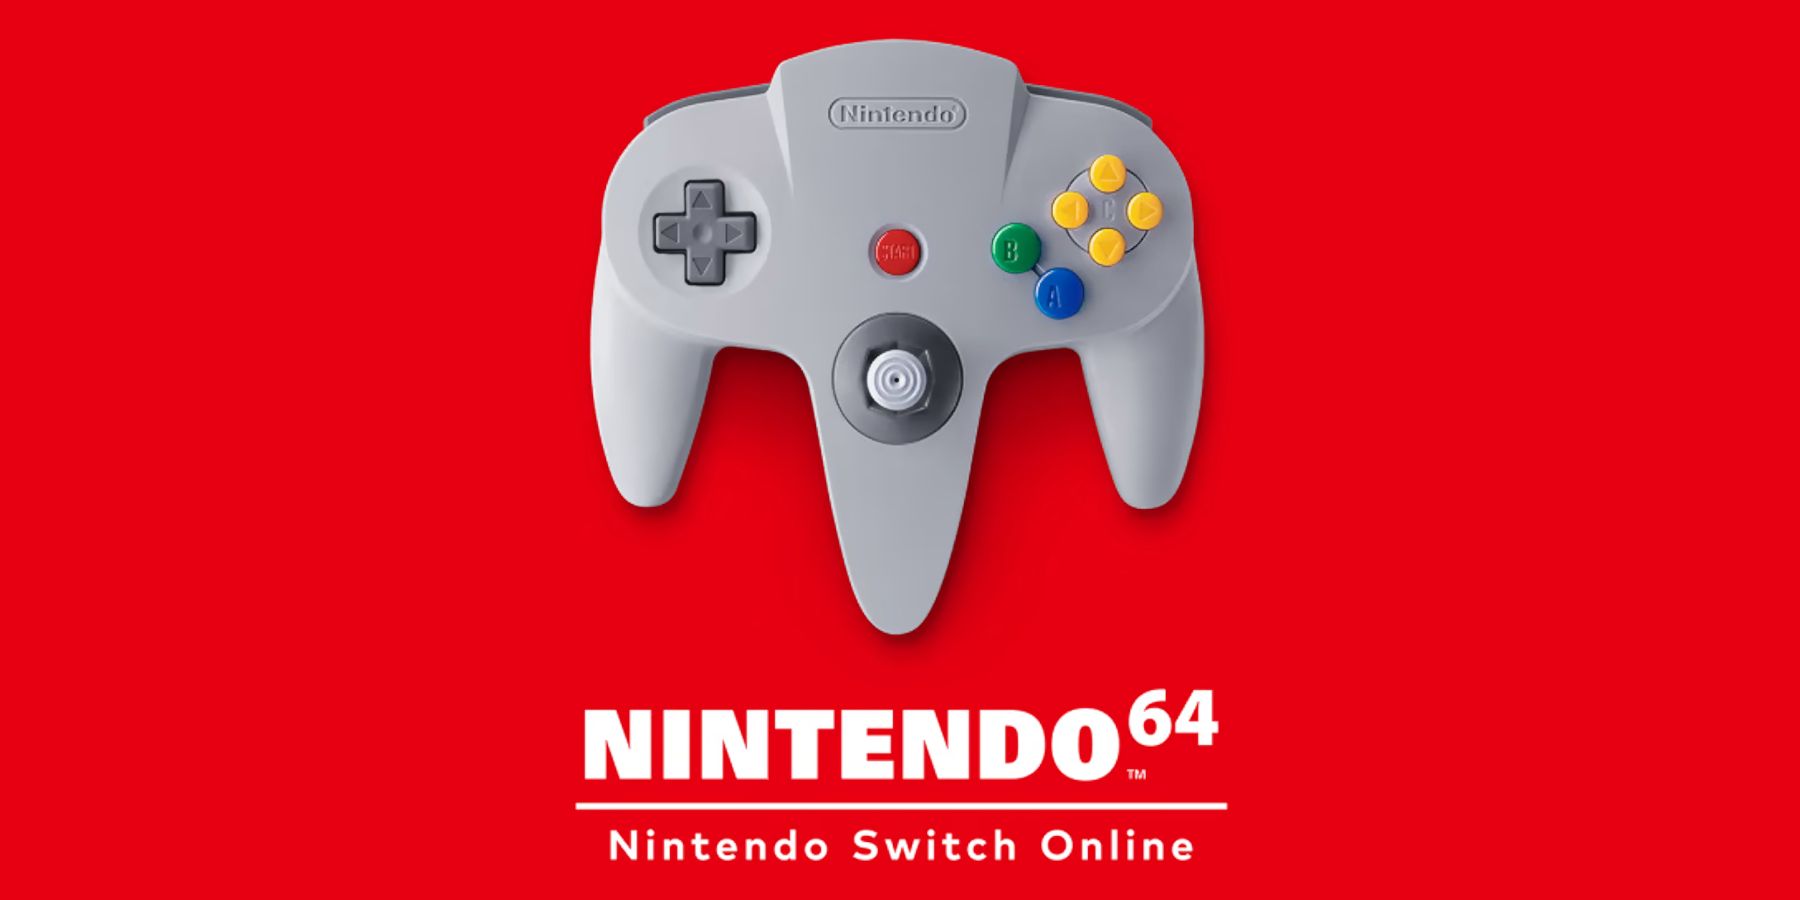 nintendo switch online 64 controller